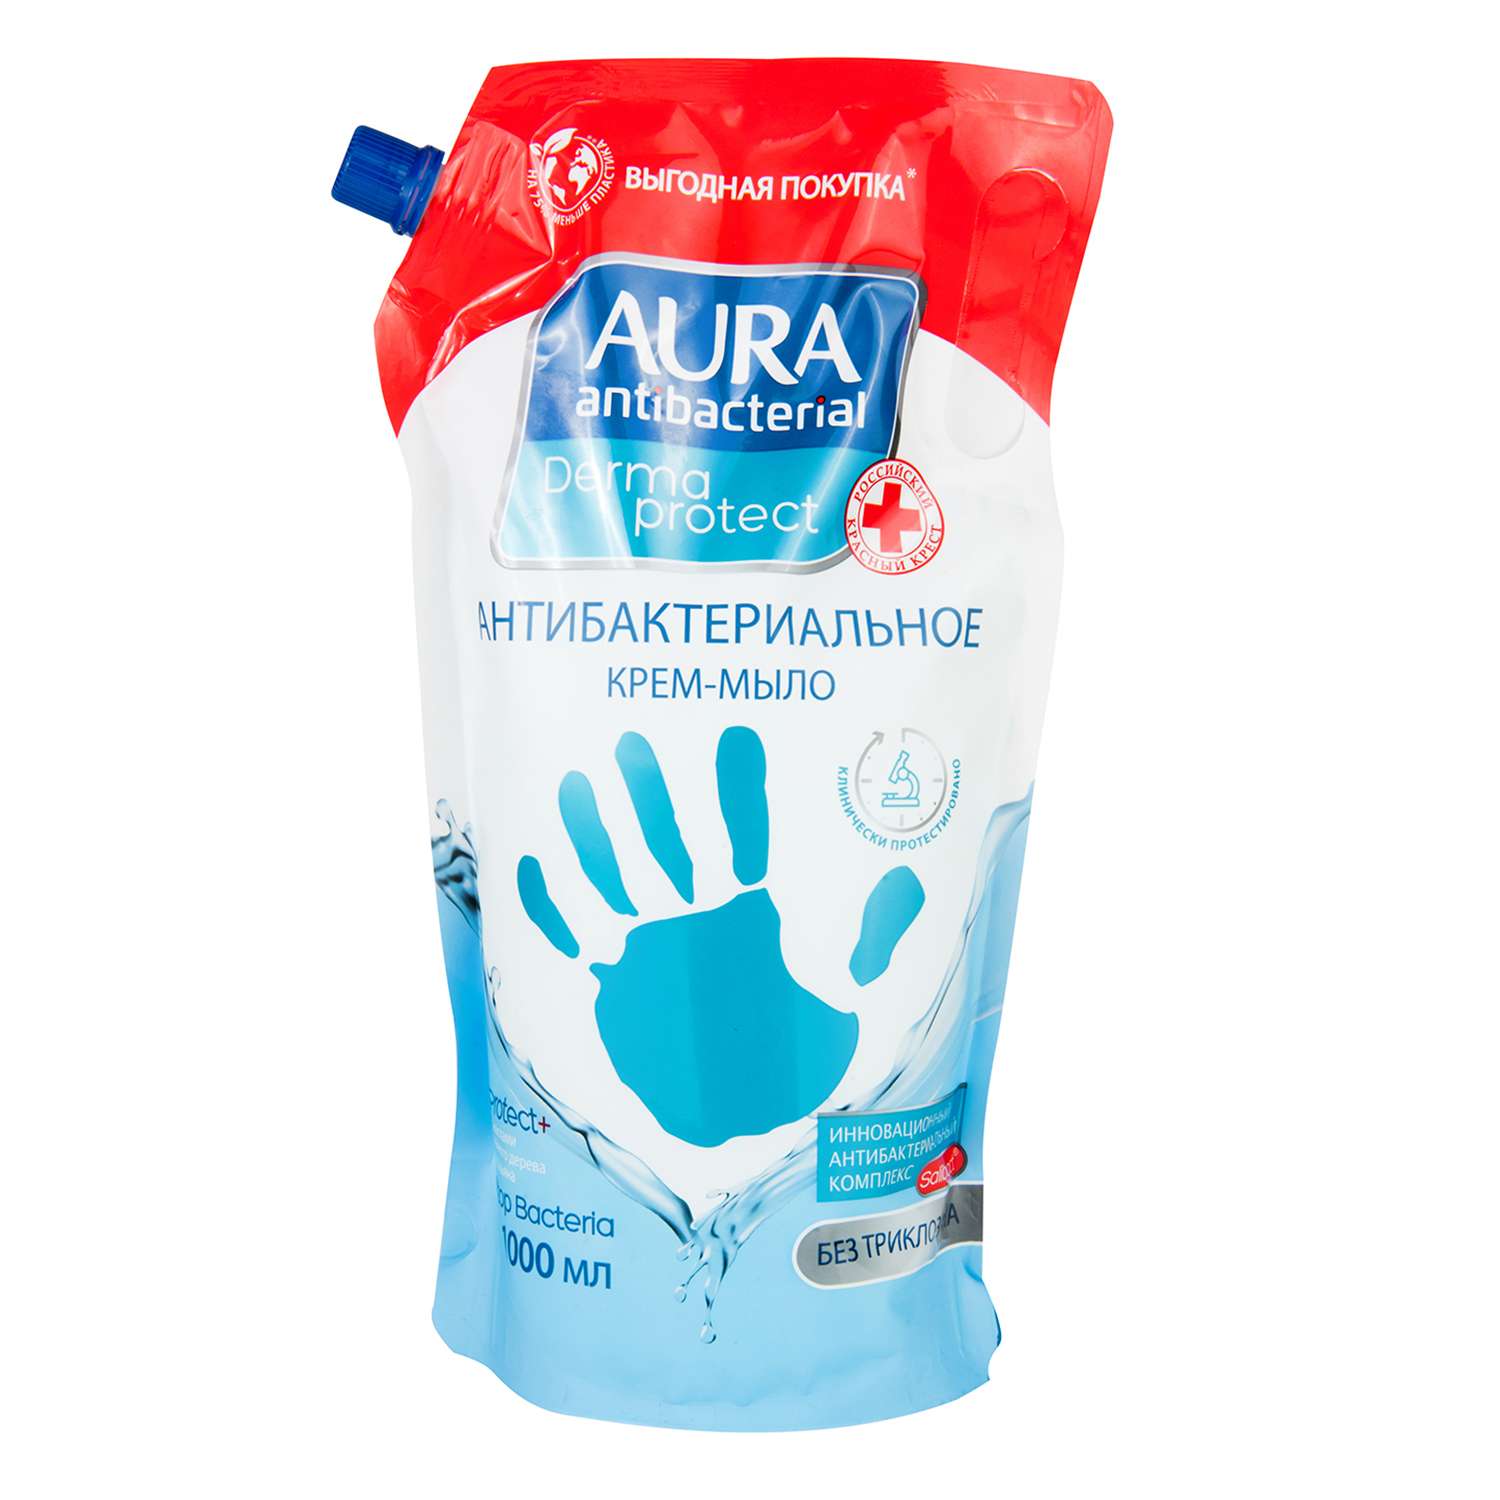 Крем-мыло AURA Antibacterial Derma protect 1000мл - фото 1